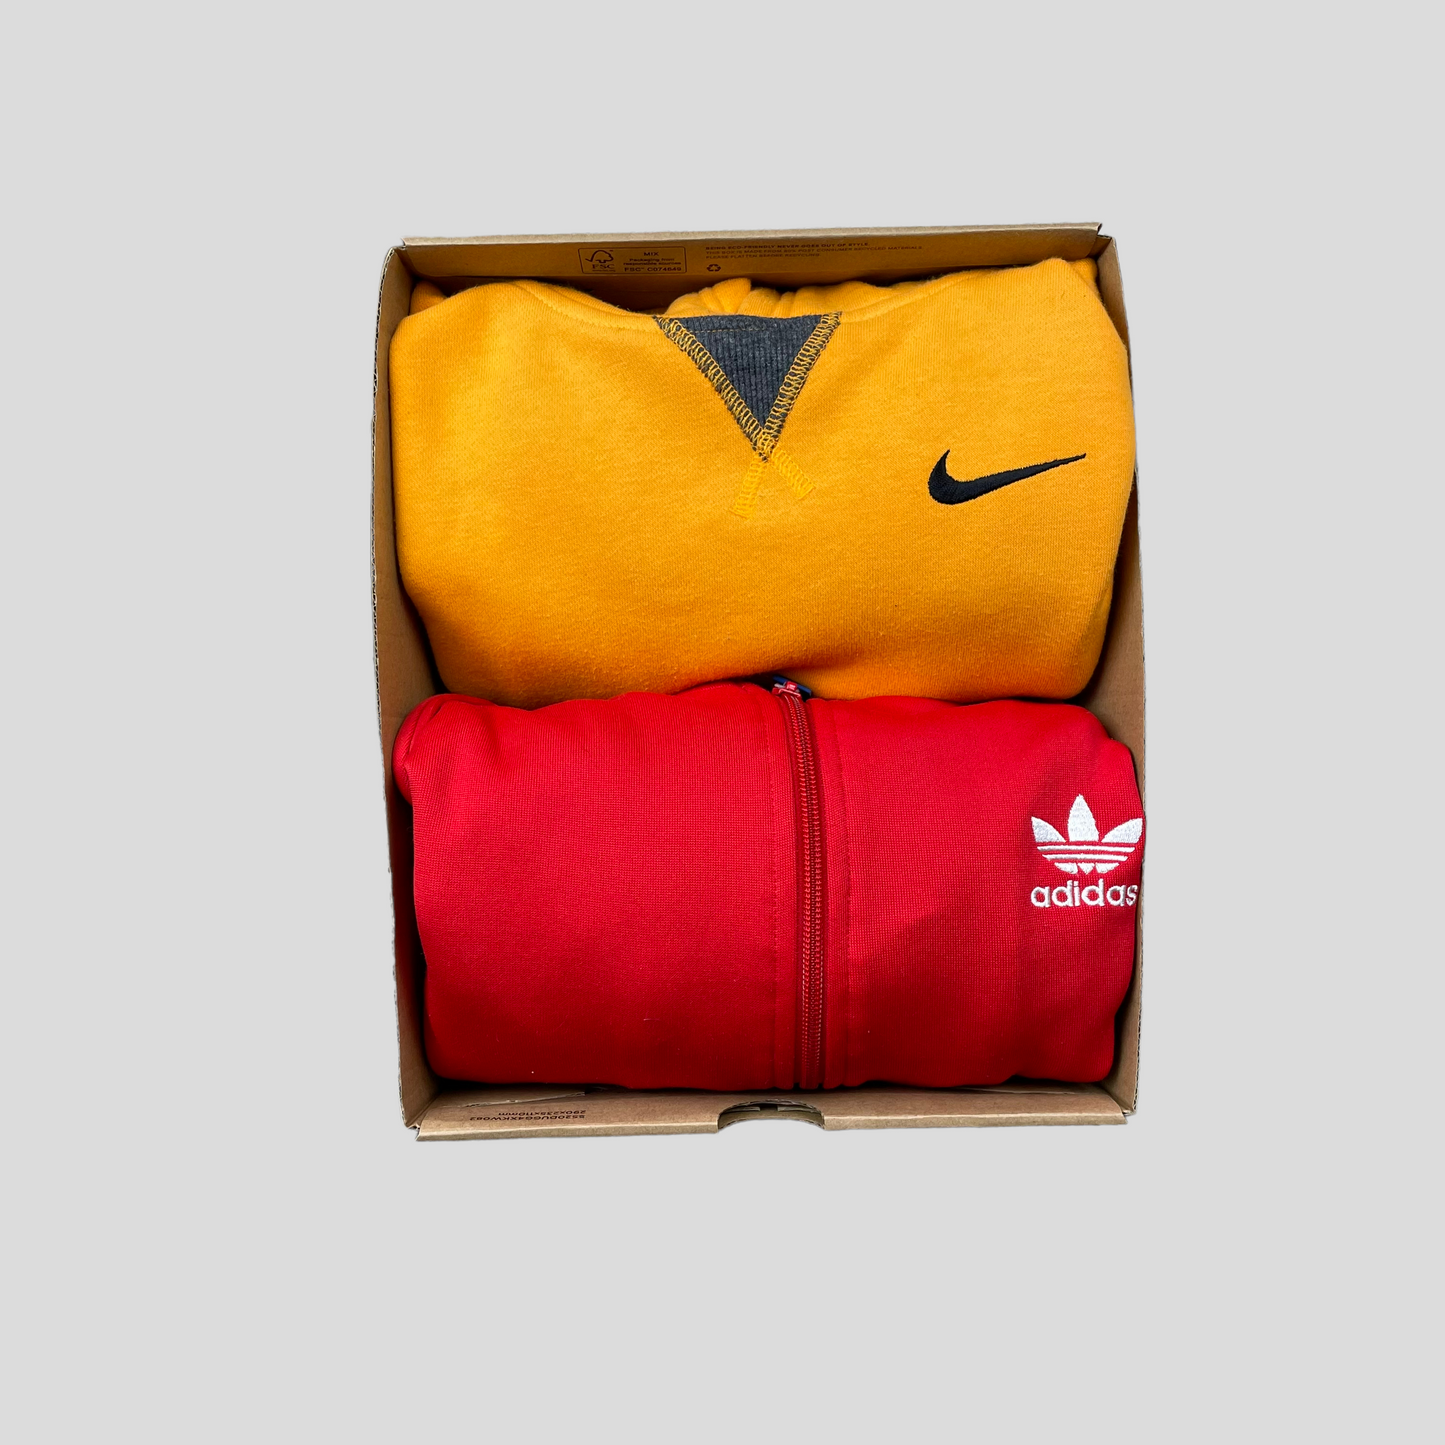 Nike & Adidas Mystery Box